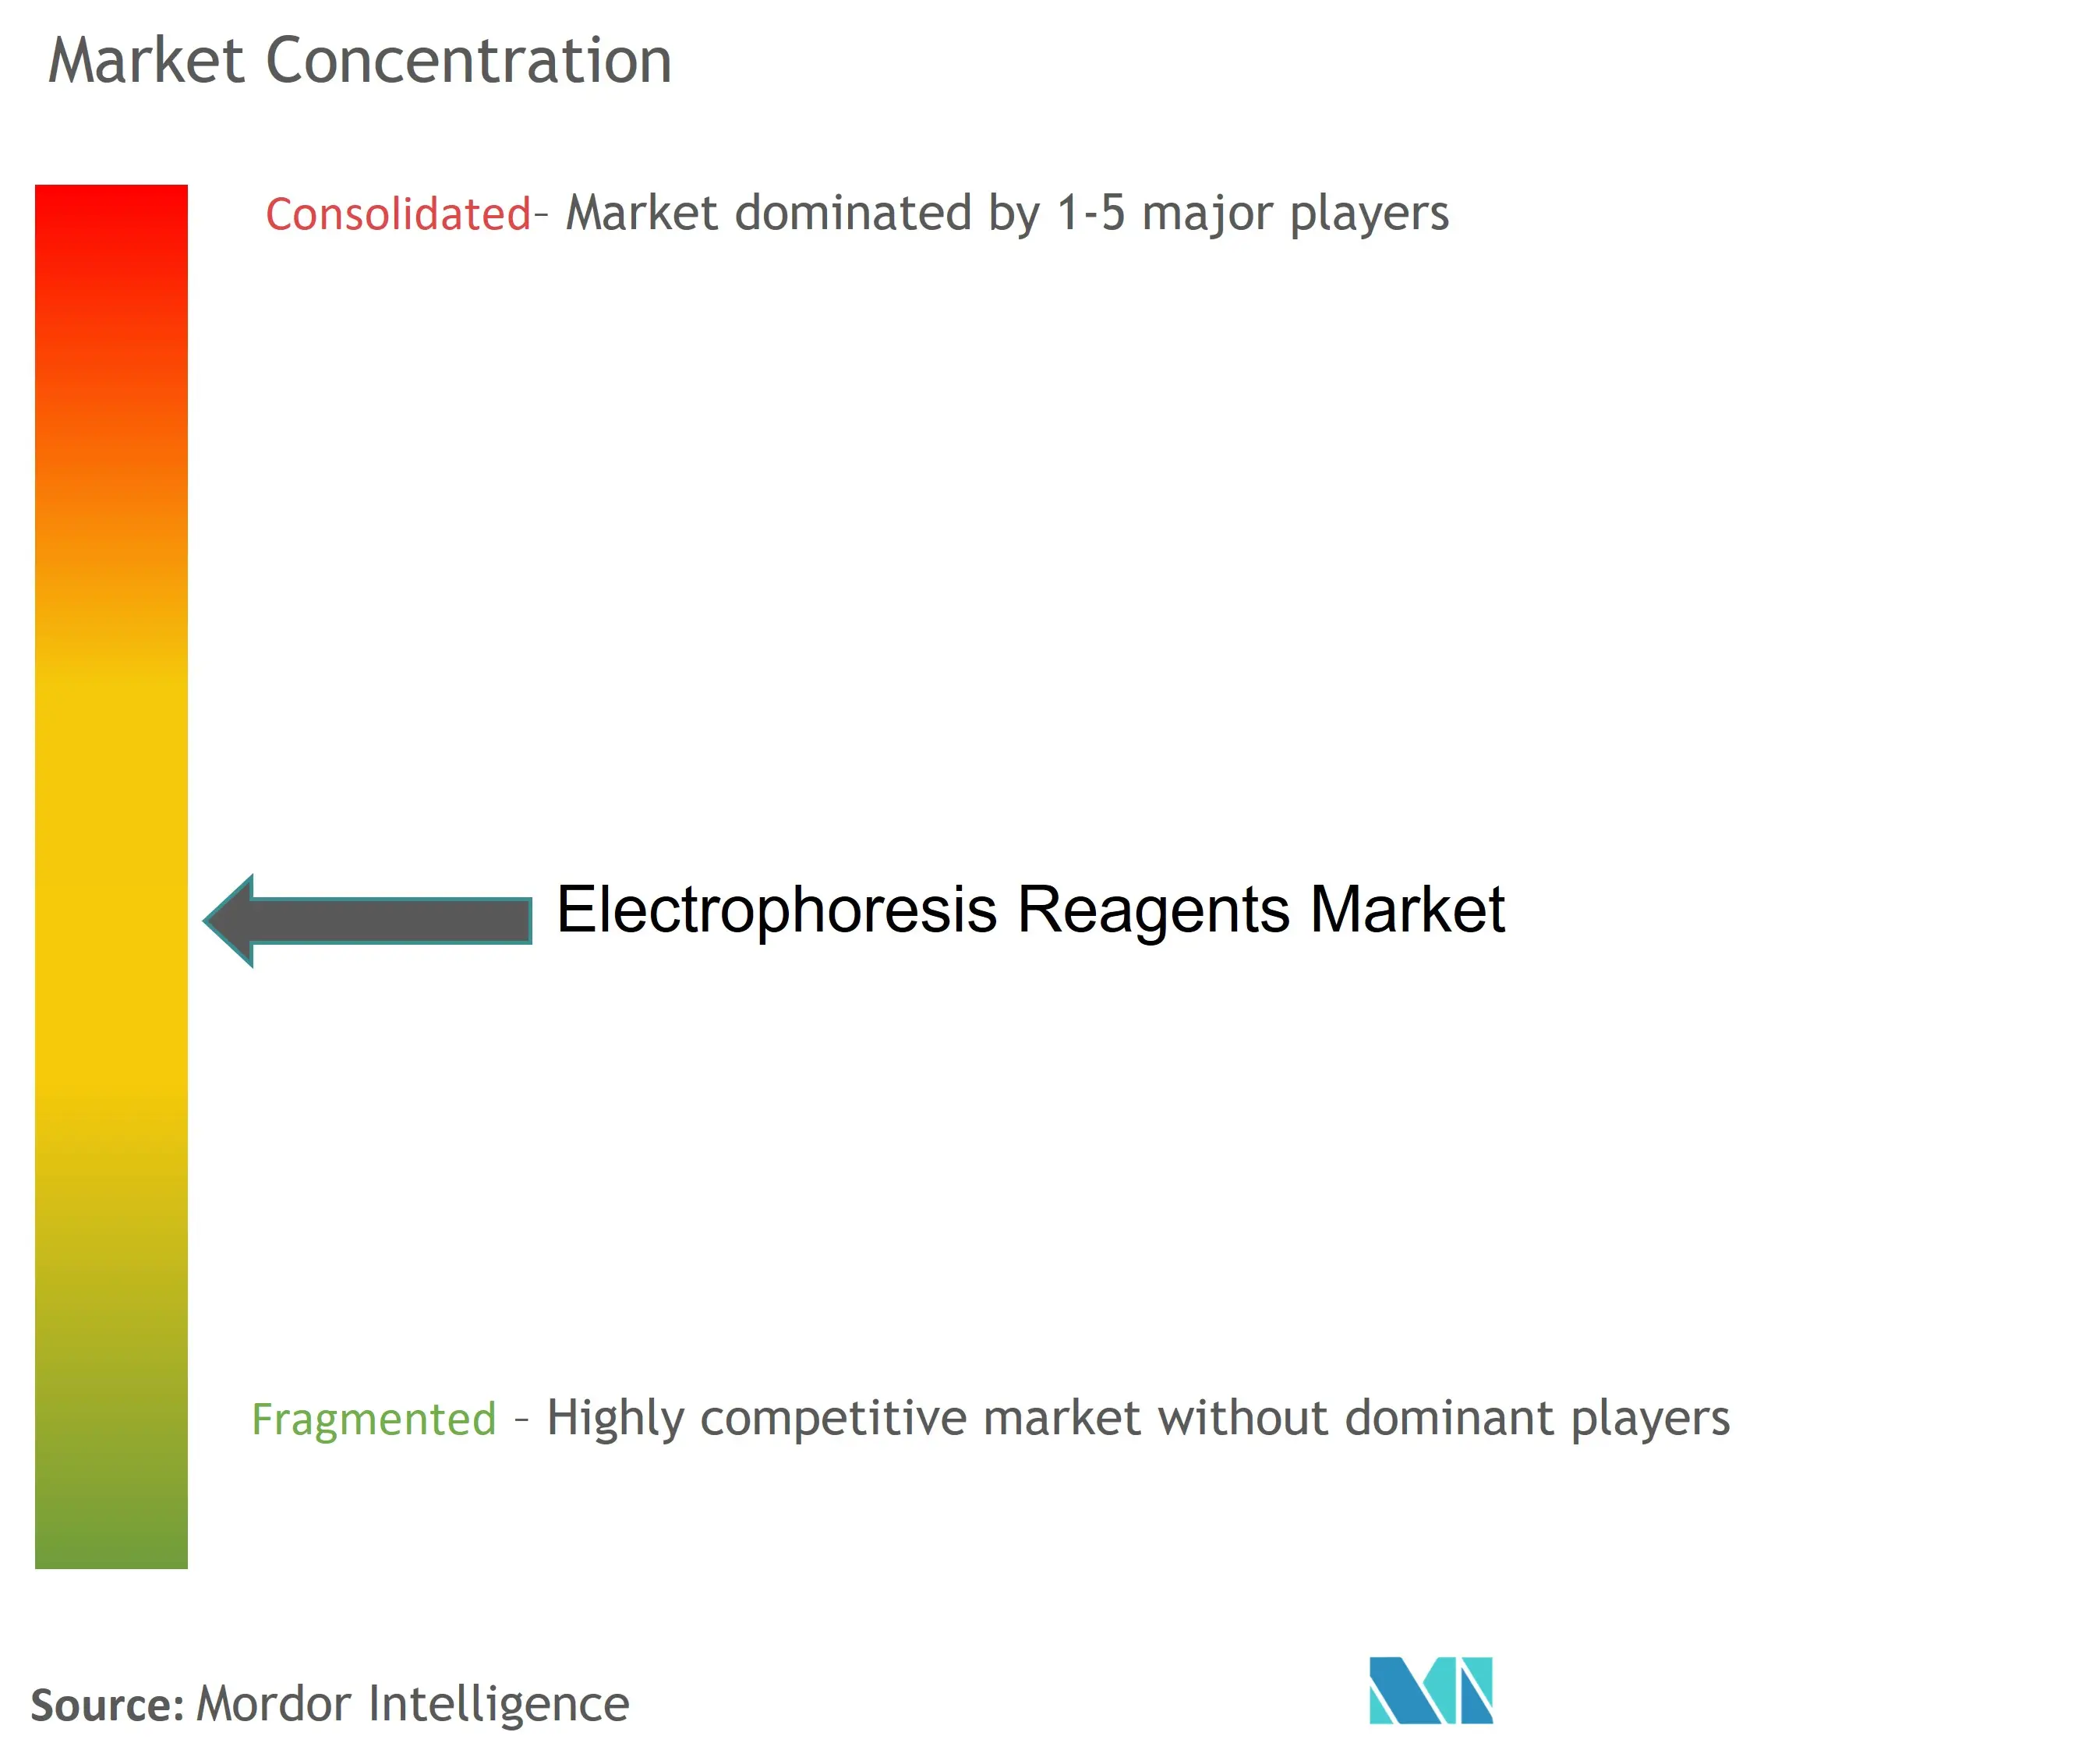 Electrophoresis Reagents Market Concentration